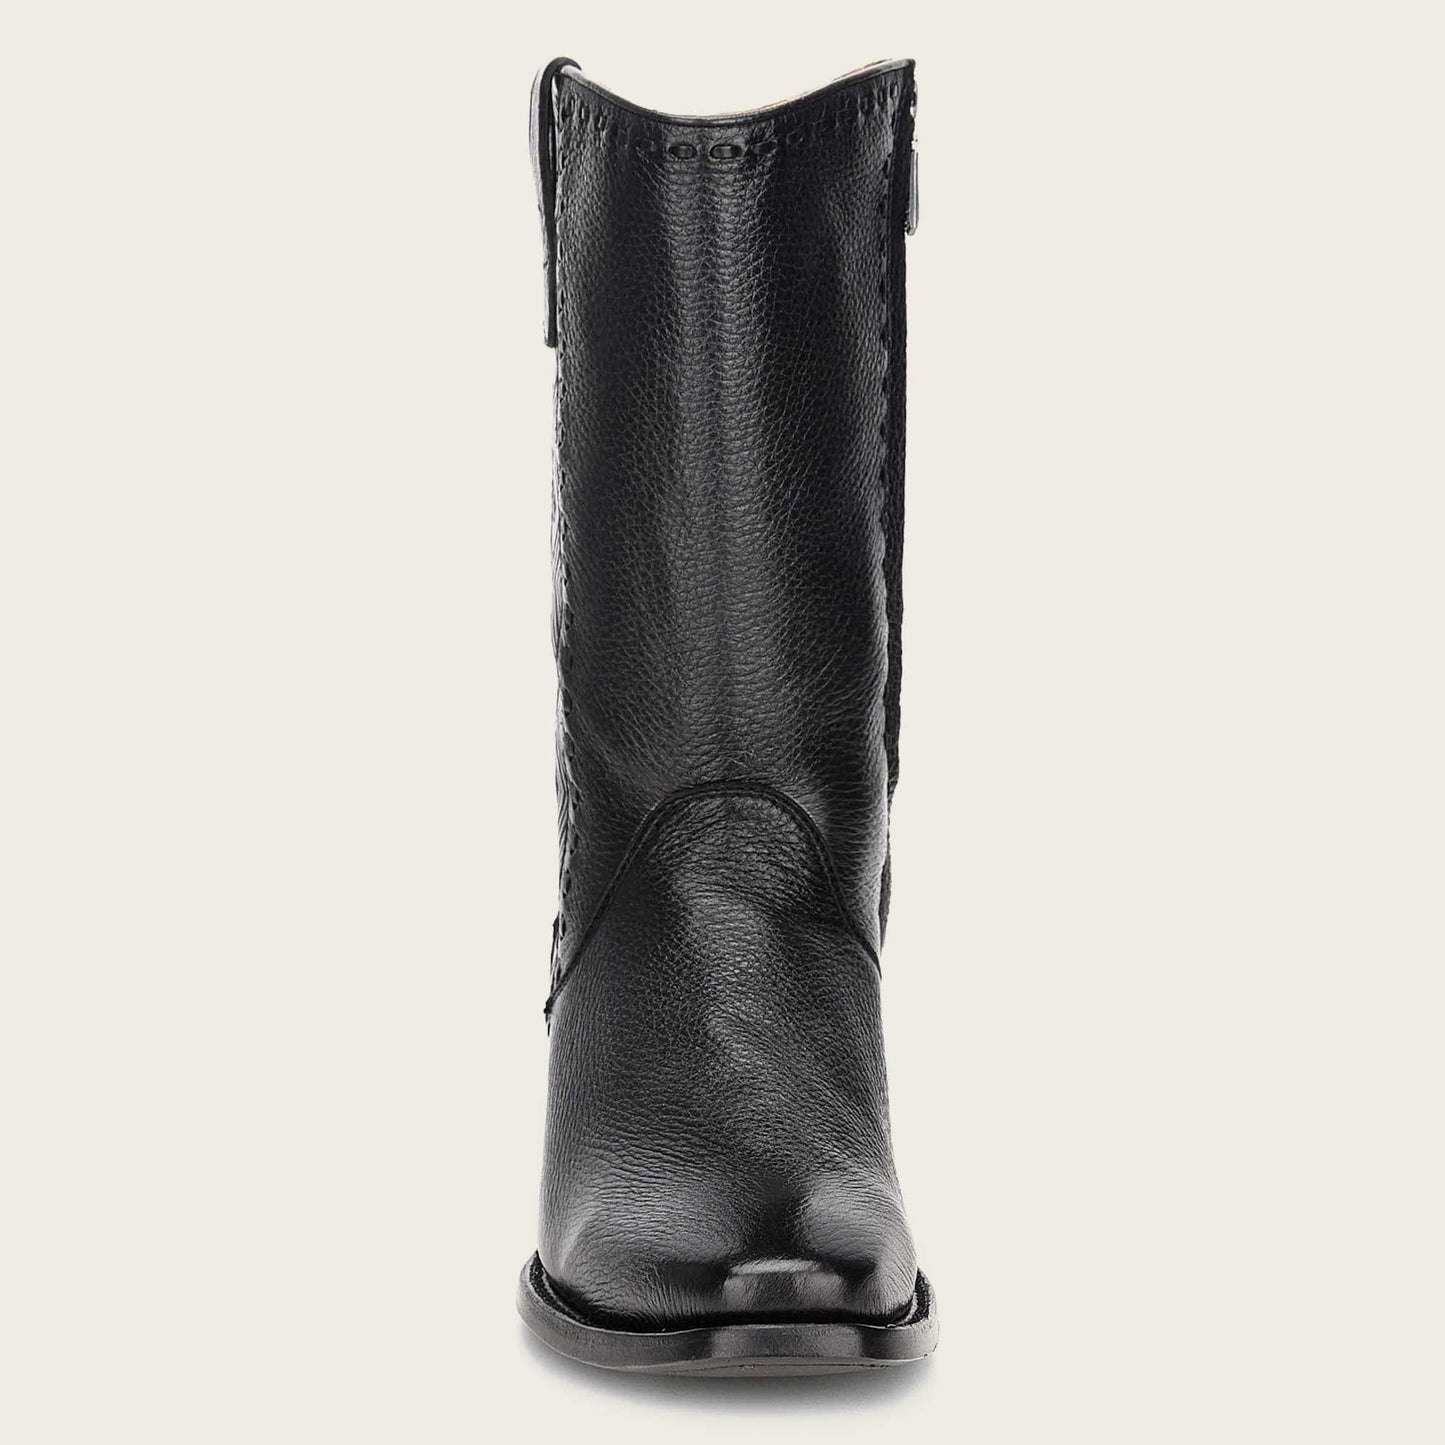 Engraved black deer leather men's dress boot with handwoven details